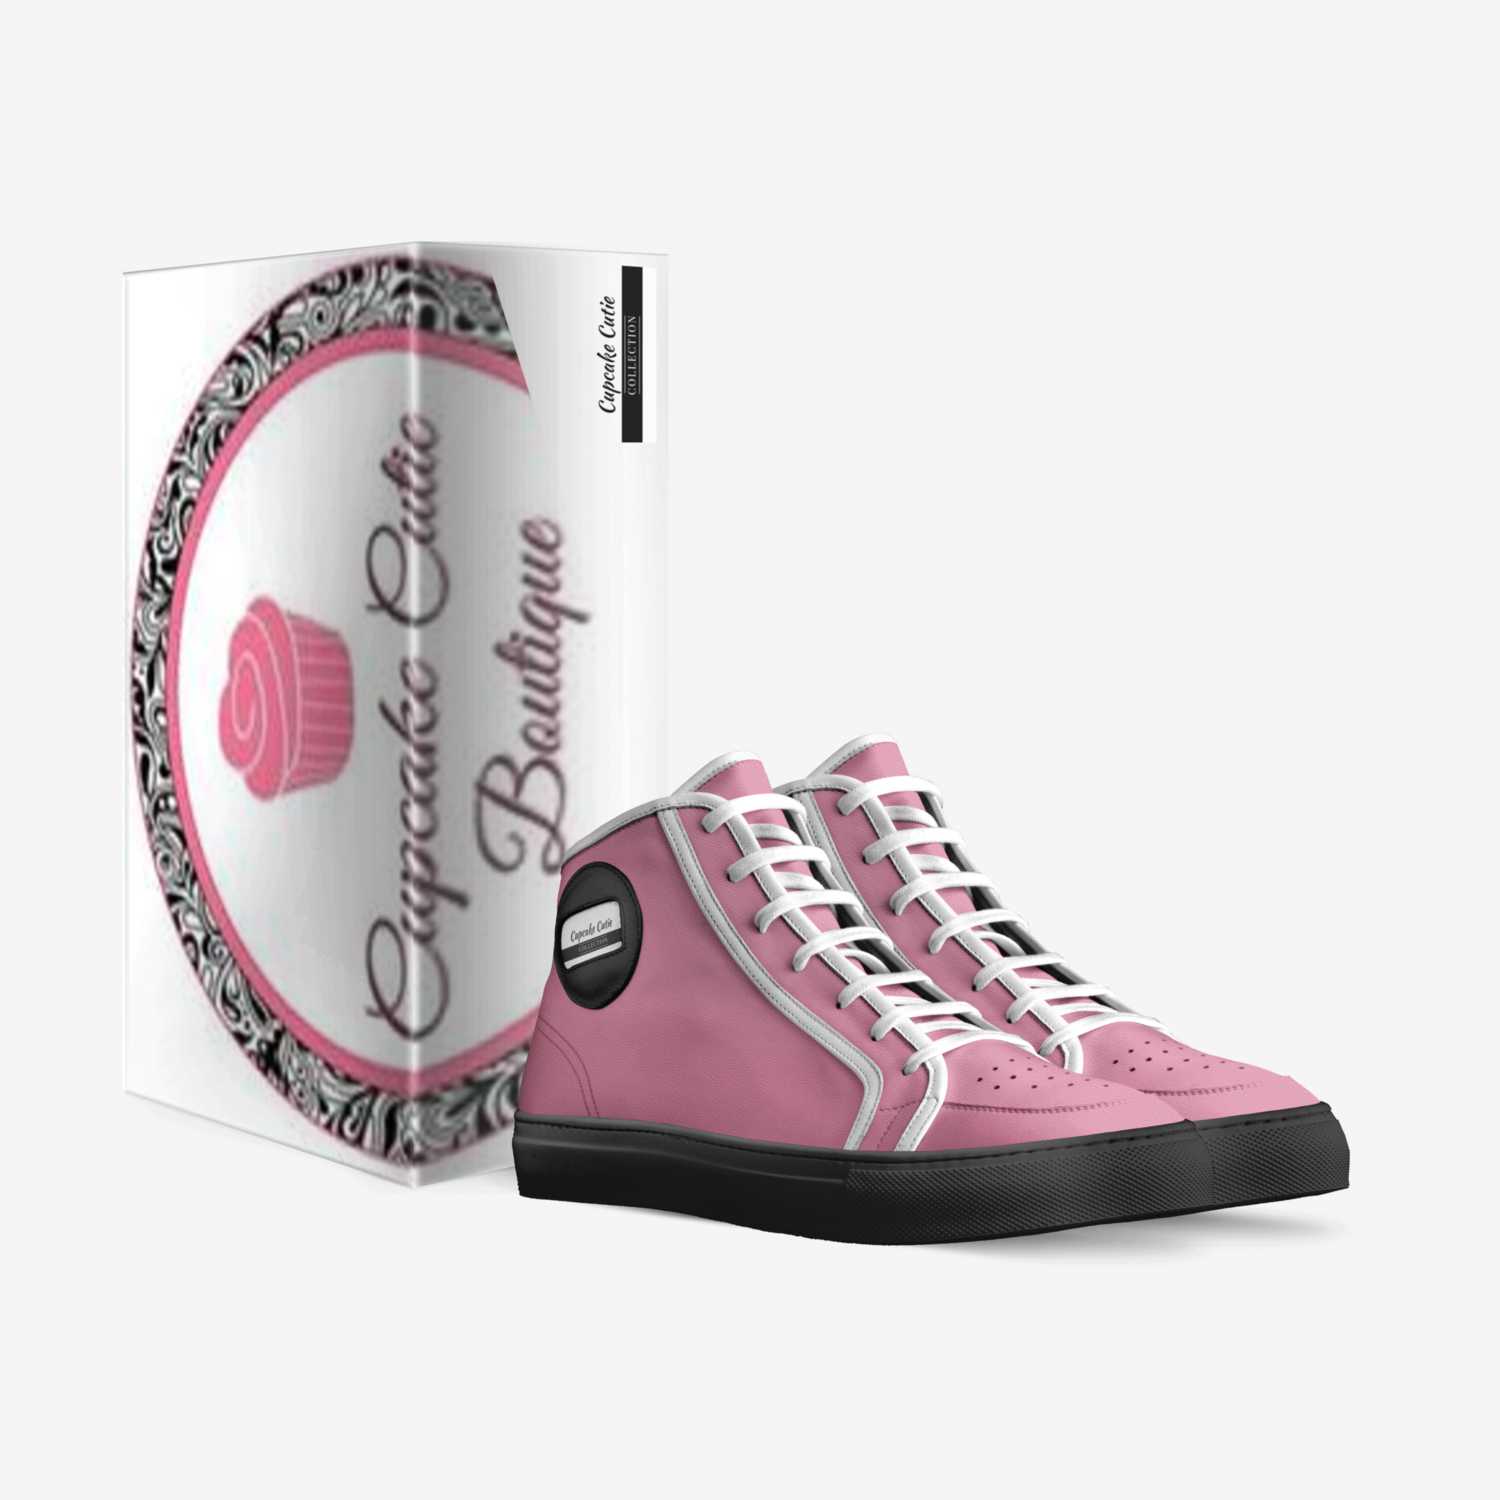 Cupcake Cutie  custom made in Italy shoes by Damon Jones | Box view